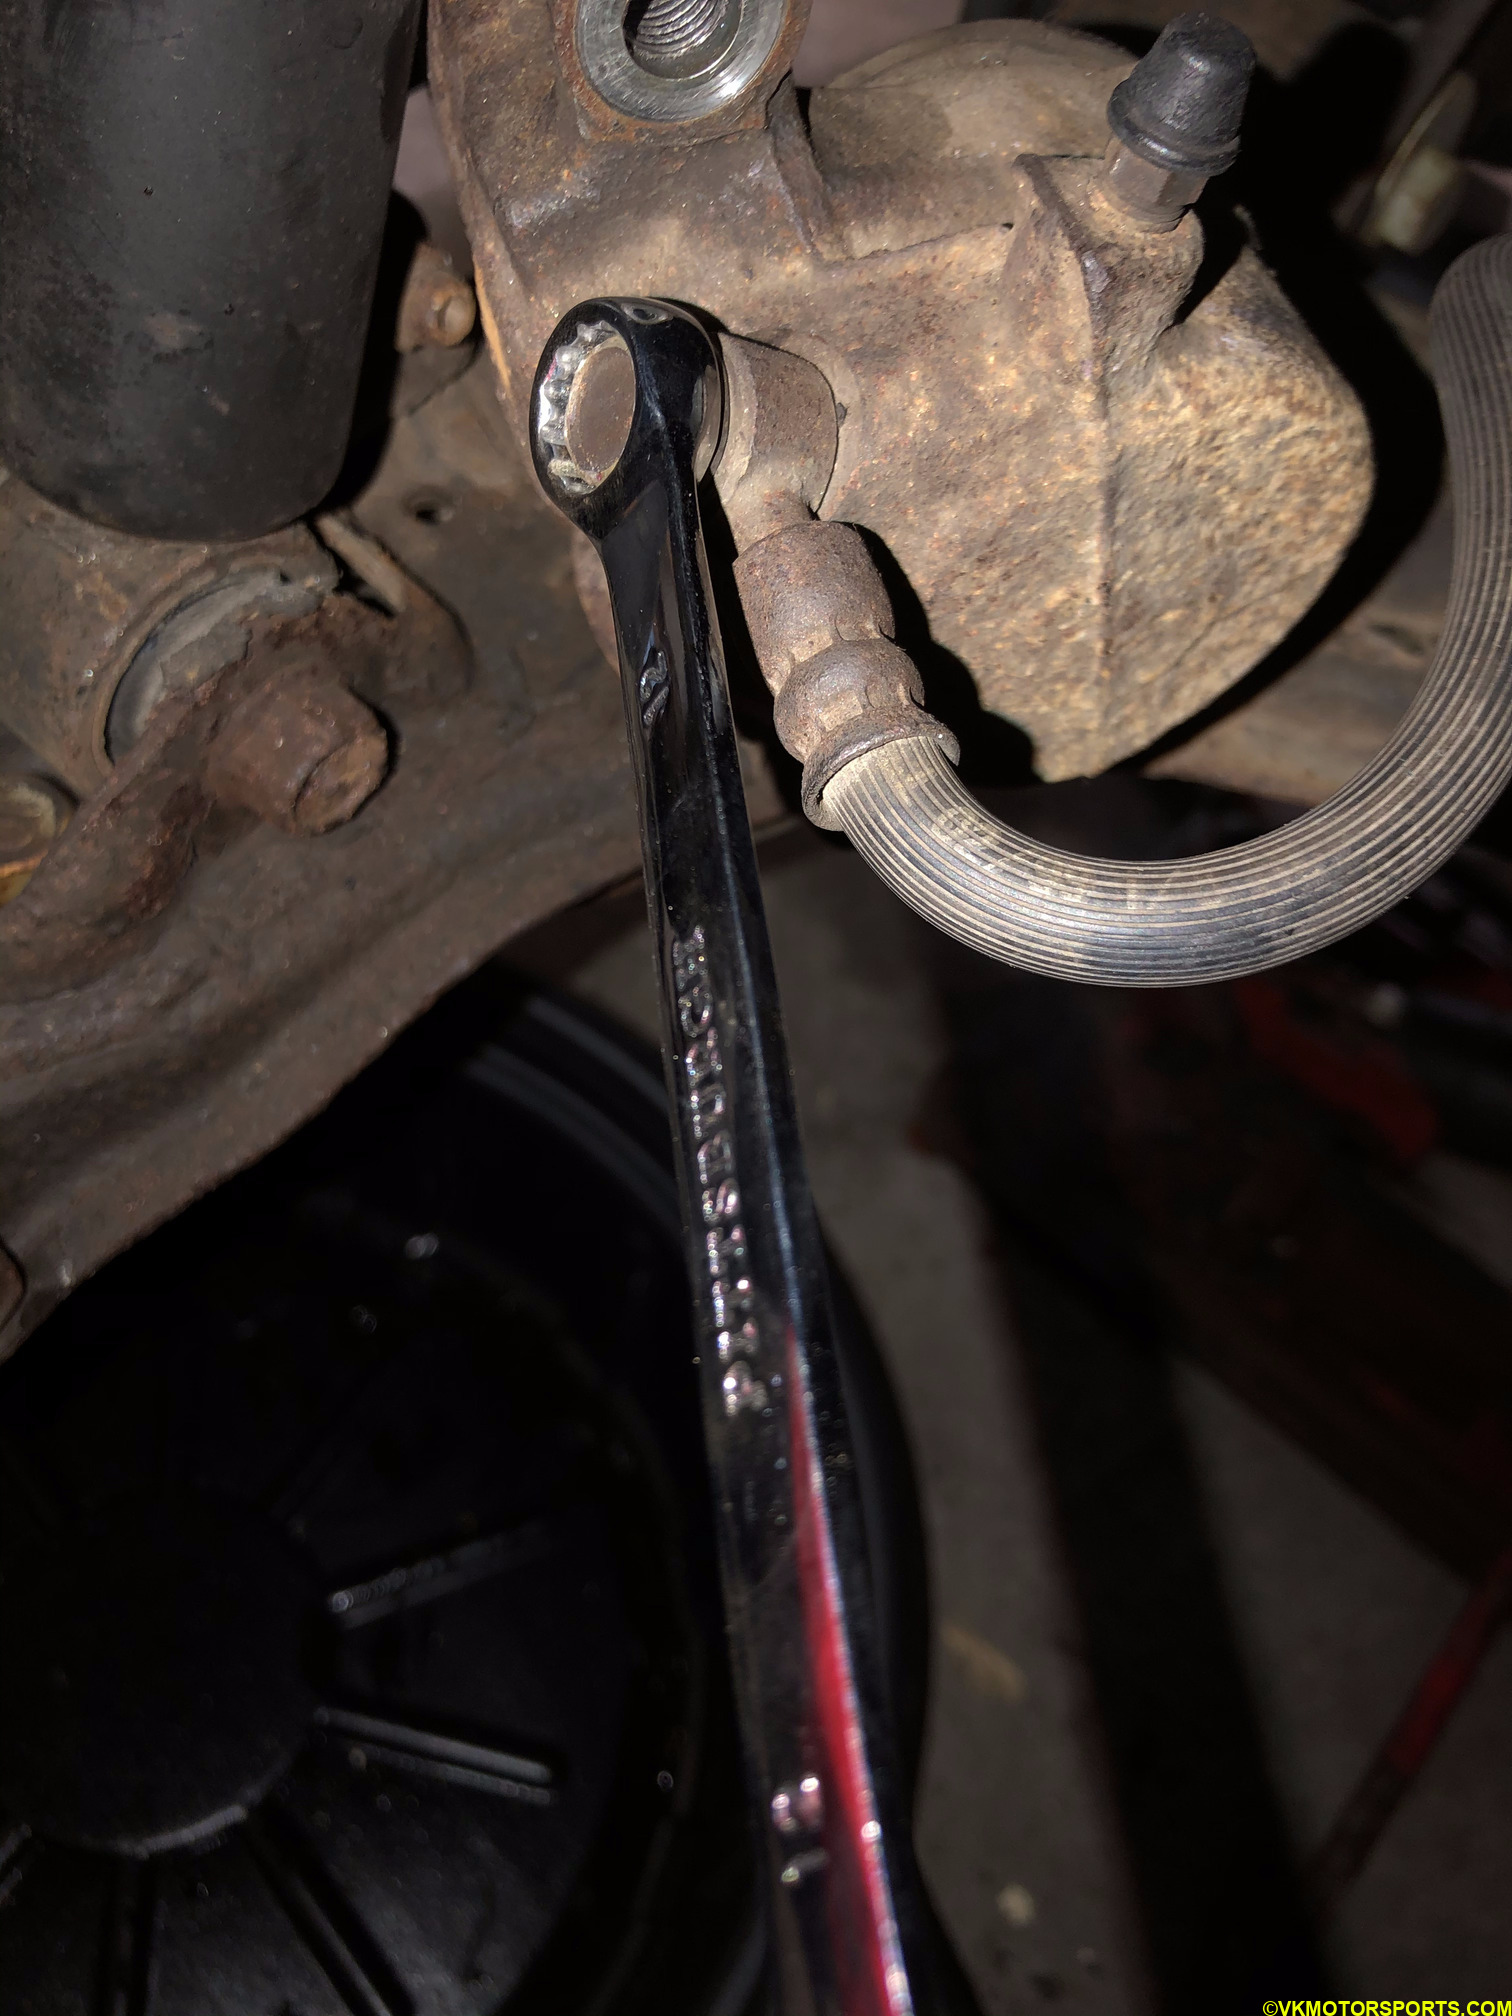 Loosen the brake line bolt using a 12mm socket/wrench